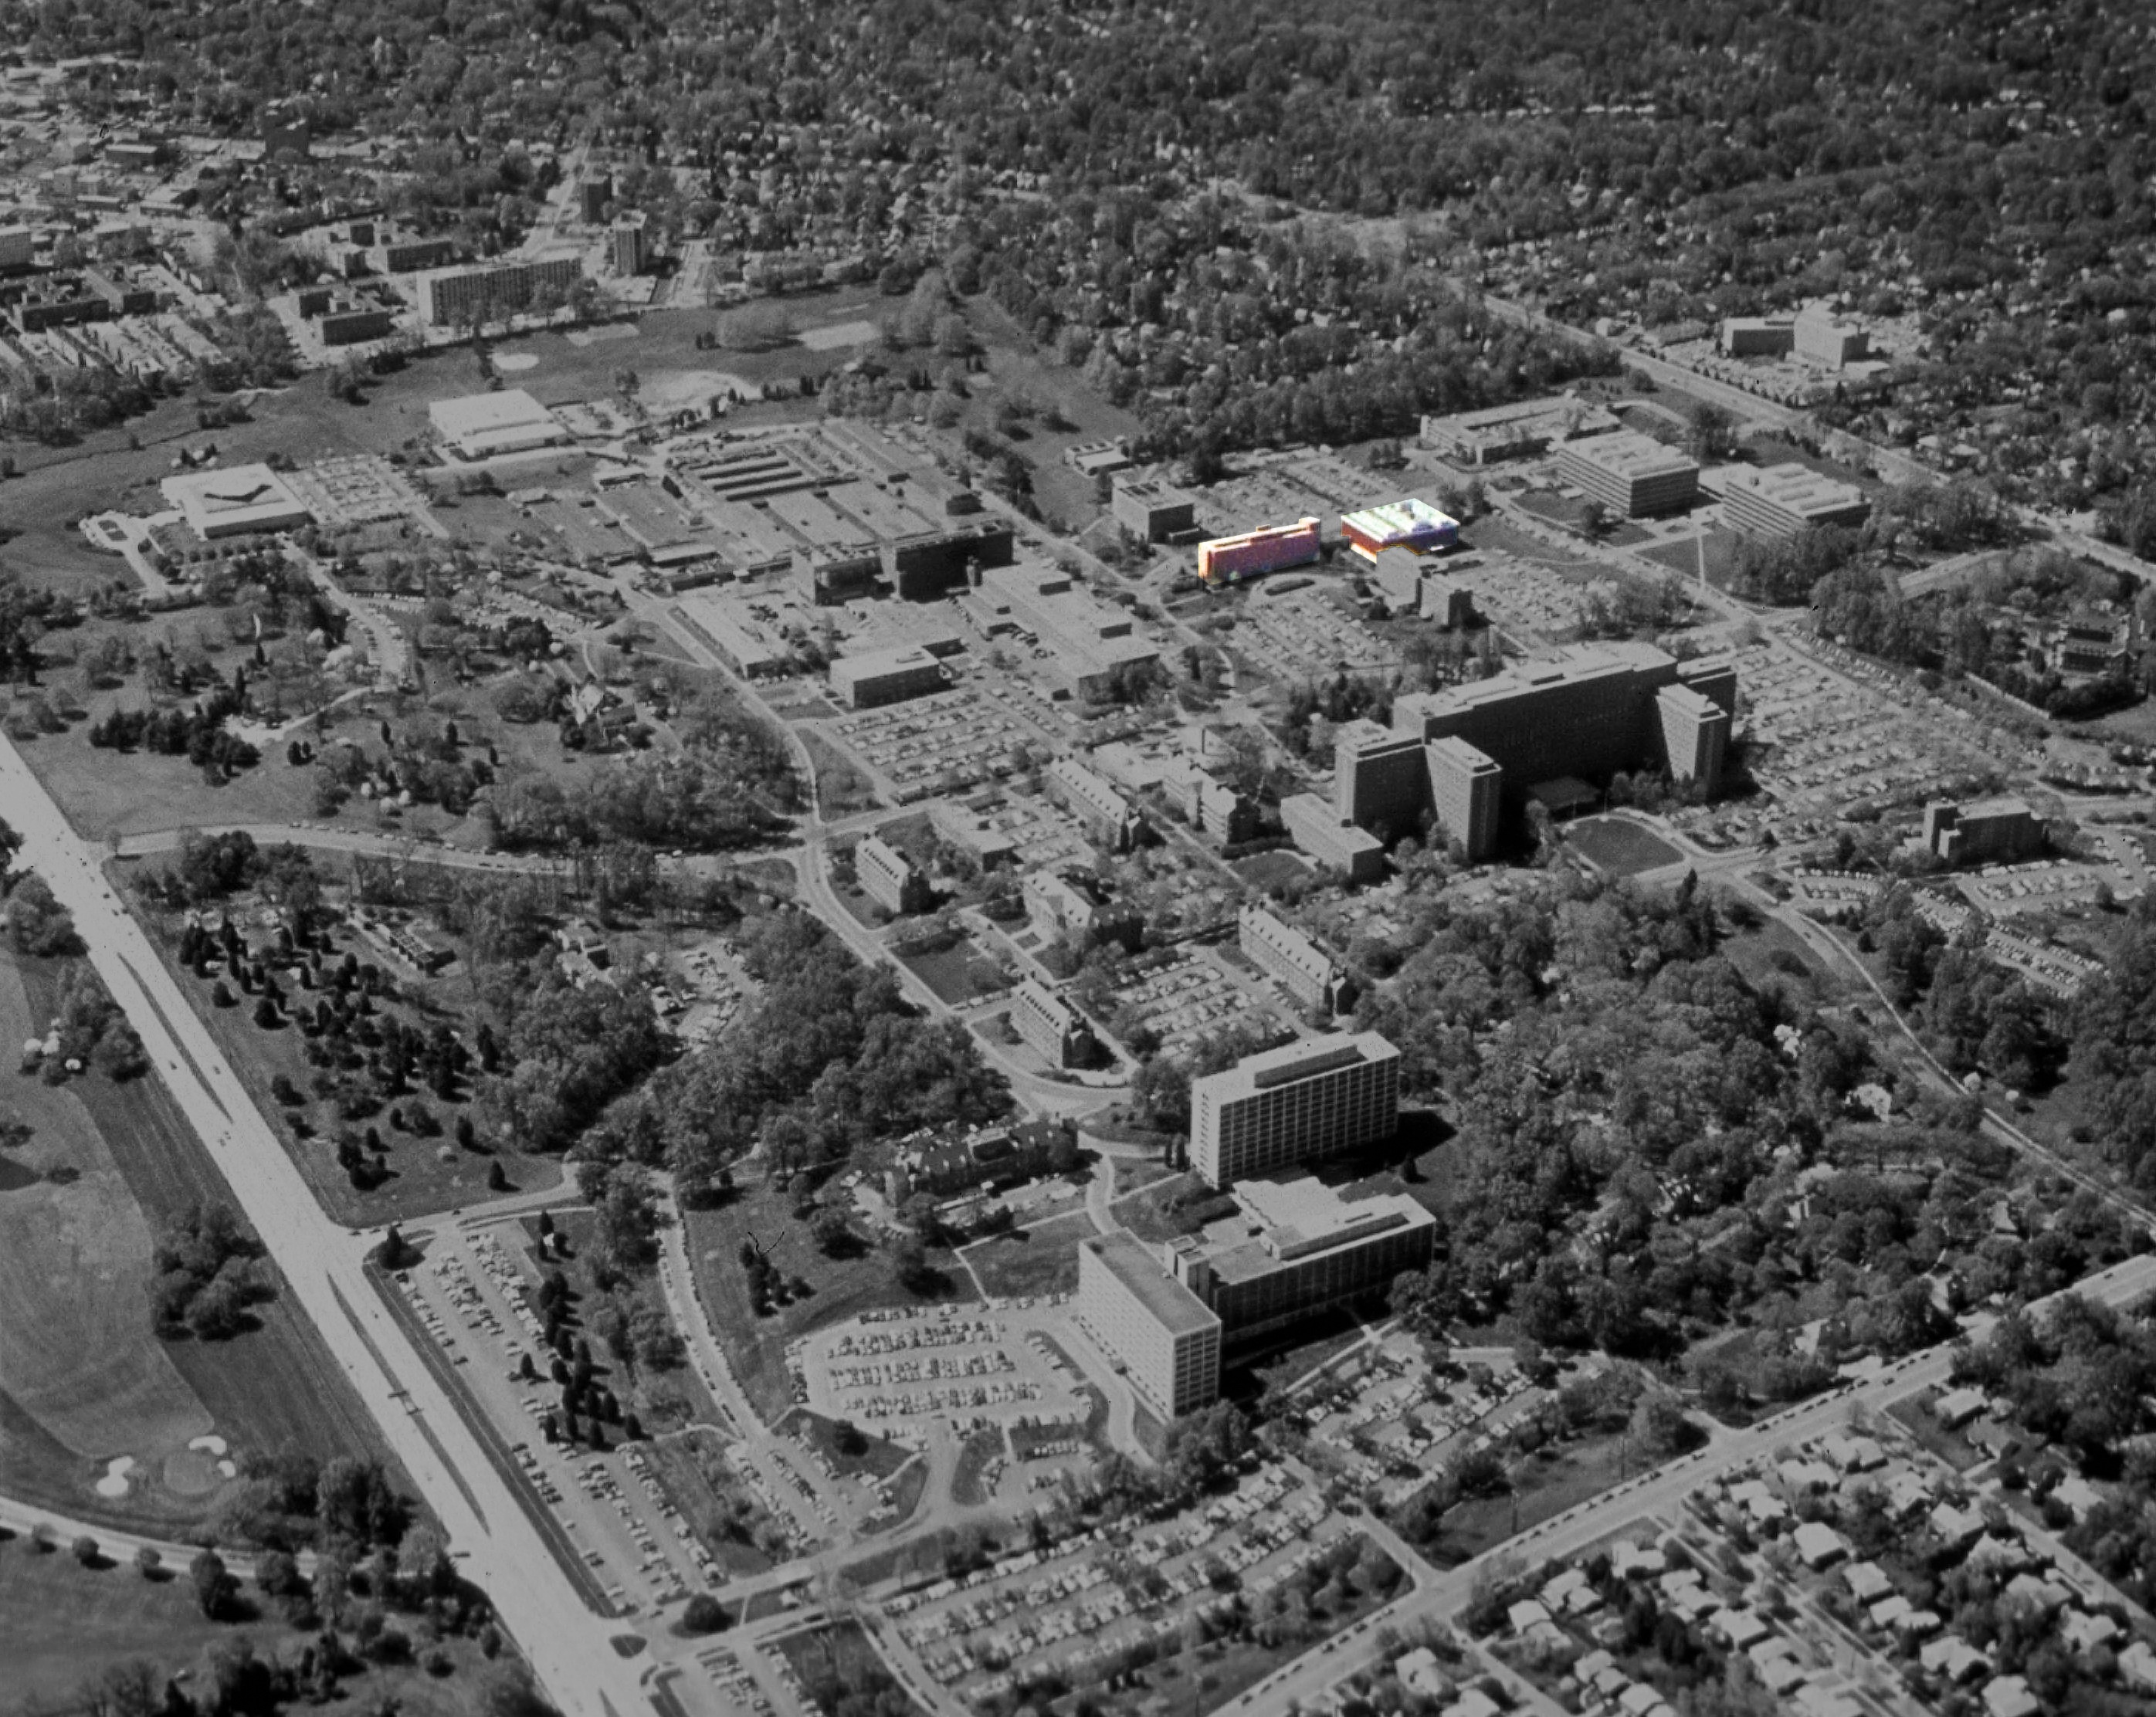 Aerial Image of the NIH campus taken around 1975